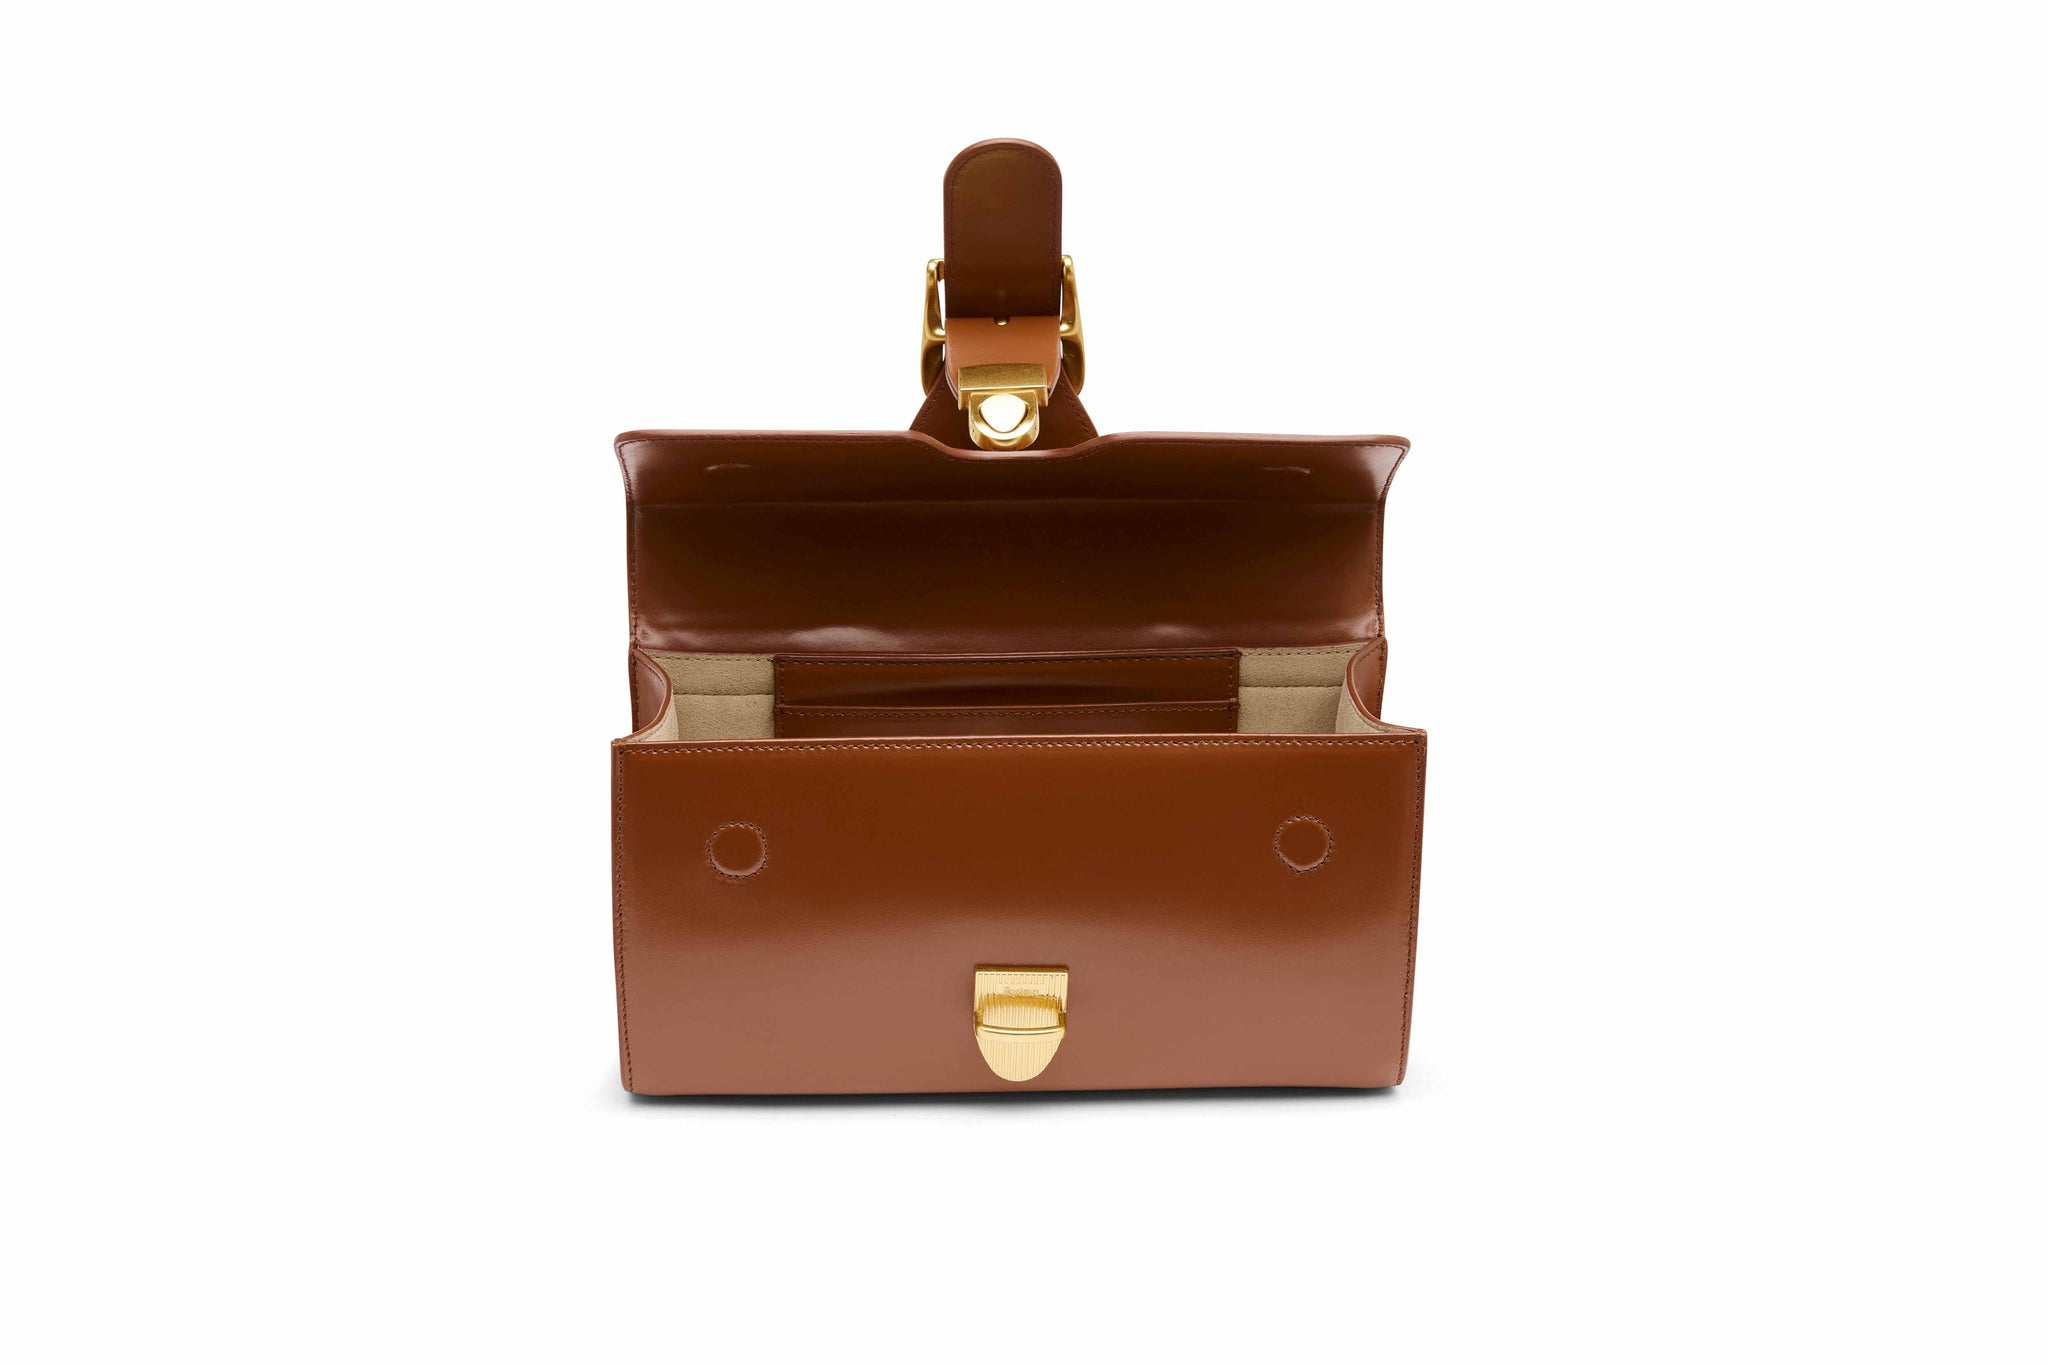 Rylan, Rylan Studio, Cognac Small Satchel with Long Handle, Leather Handbag, Made in Italy, Leather Handbag